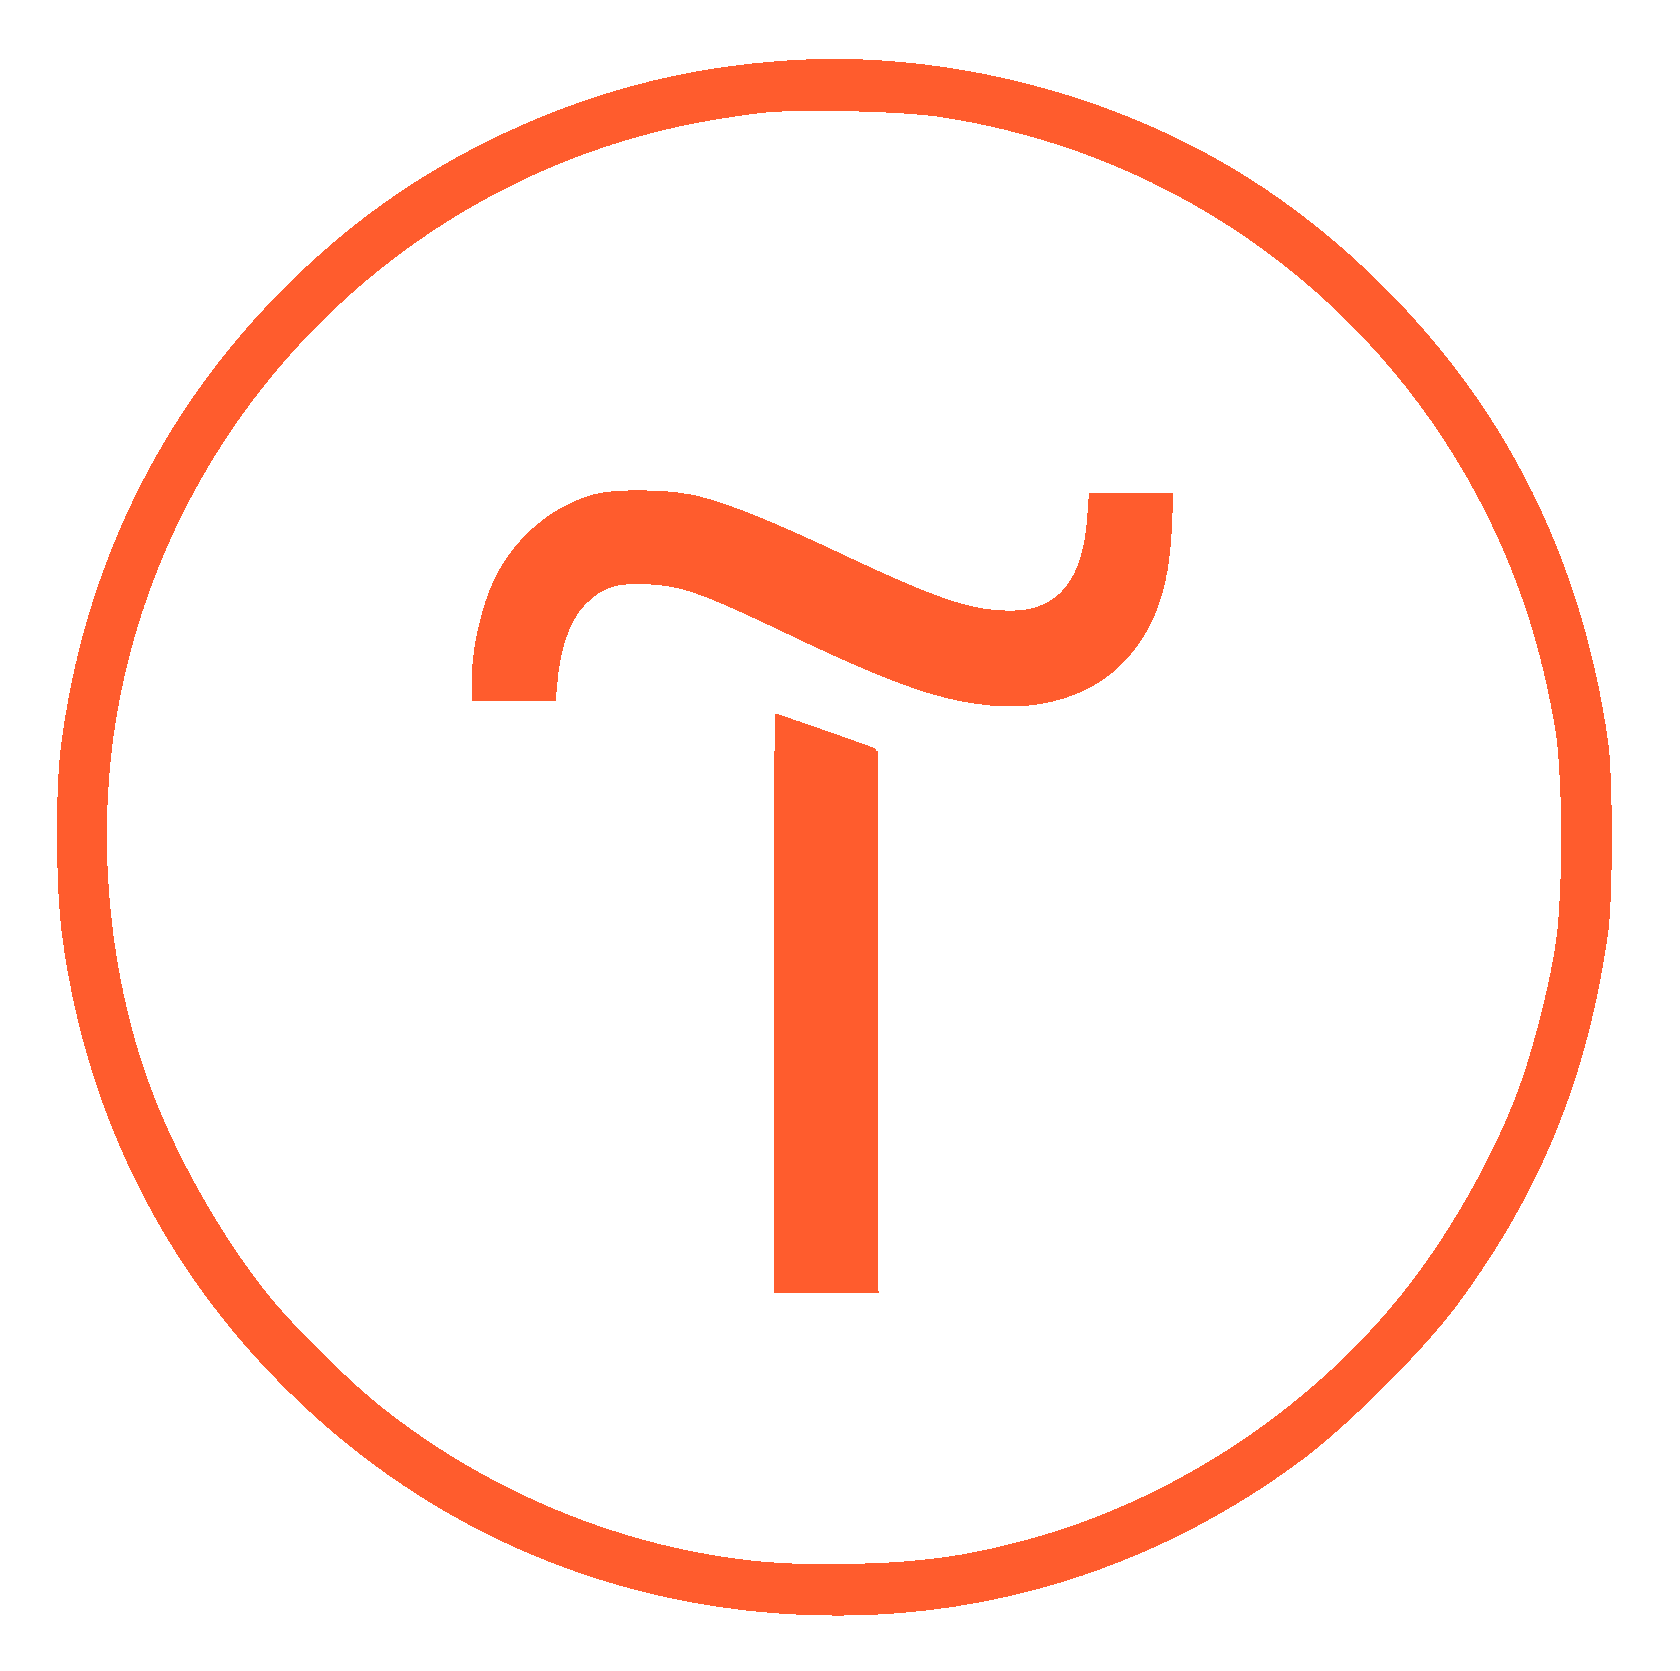 Tilda download. Tilda значок. Tilda Publishing логотип. Иконки Тильда. Логотип Тильда без фона.